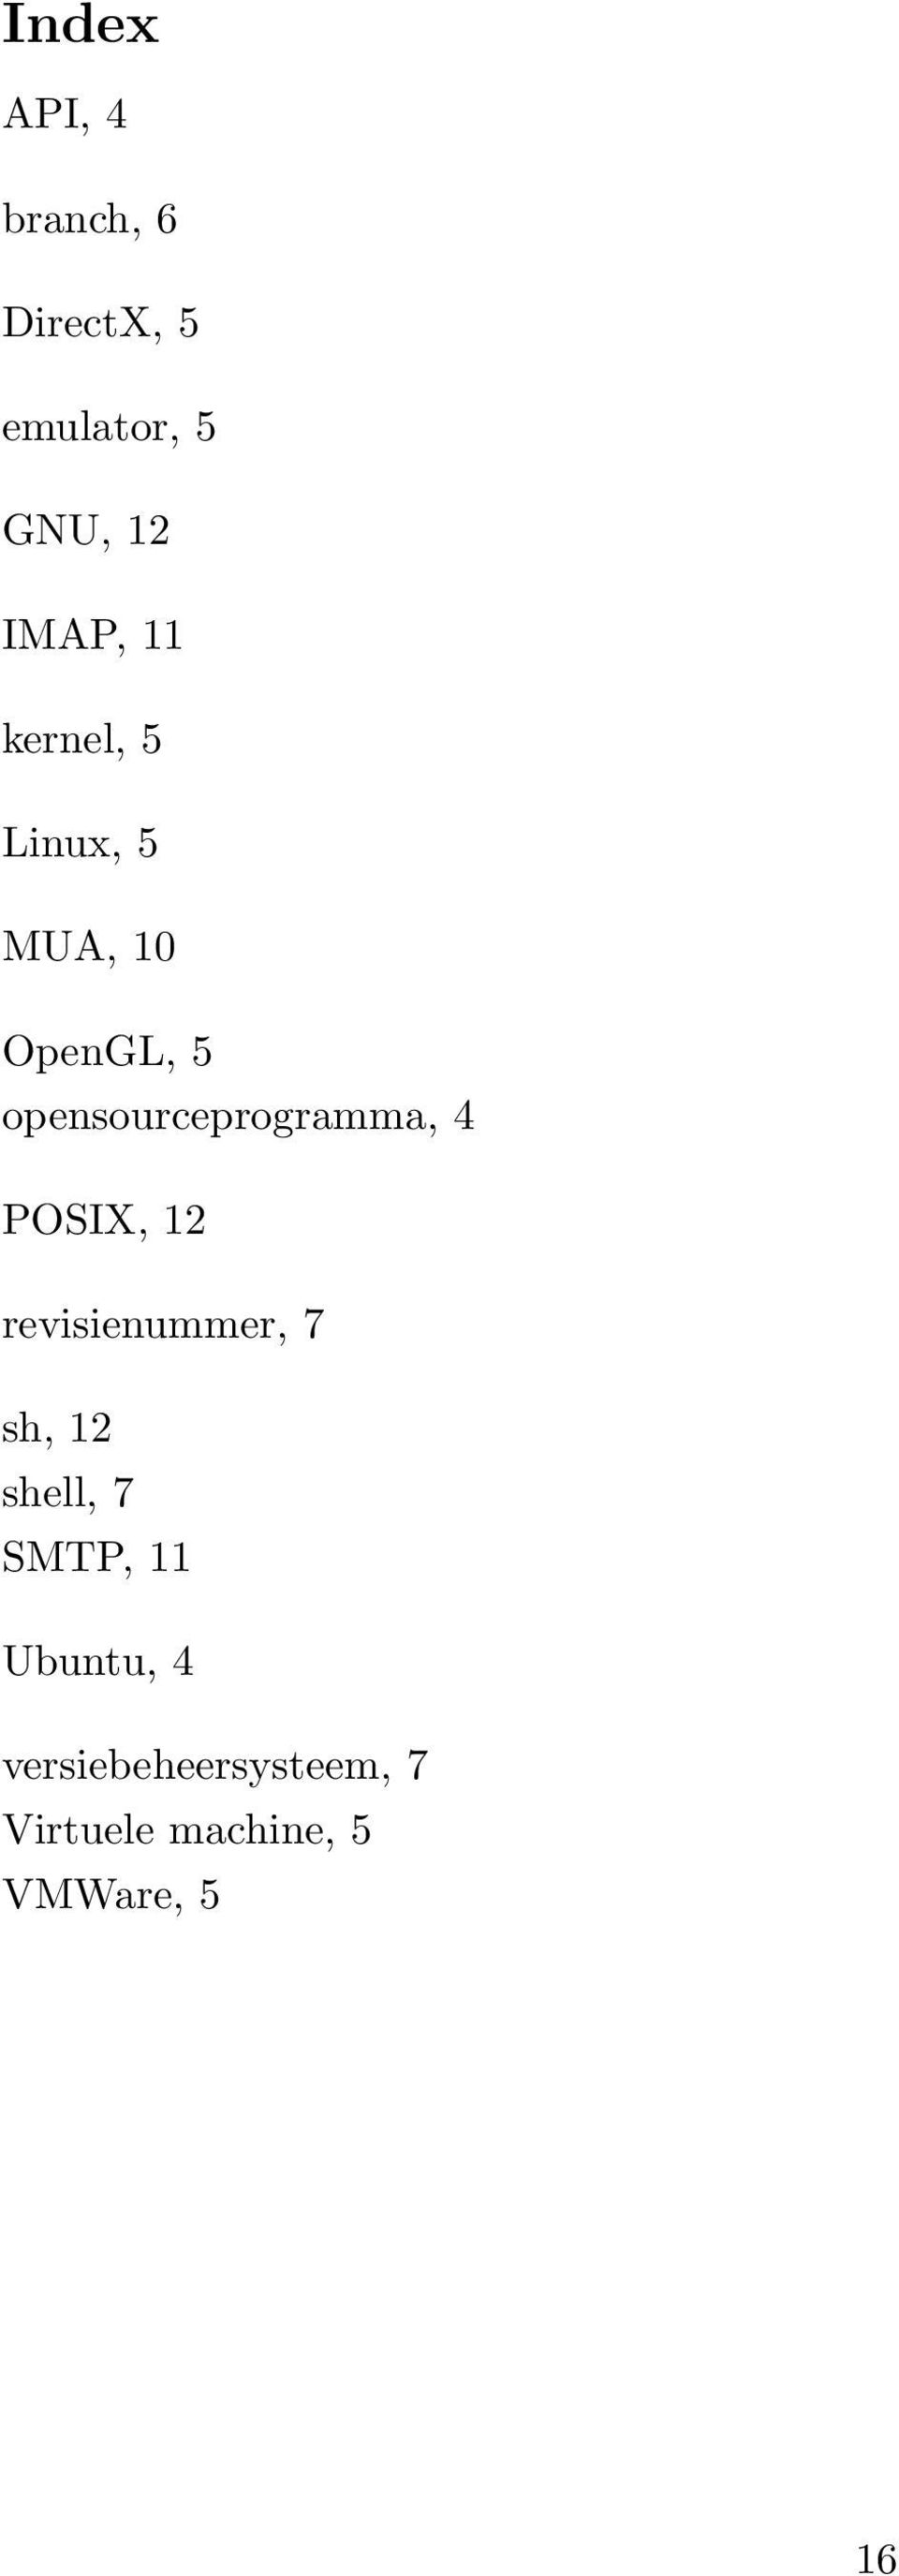 opensourceprogramma, 4 POSIX, 12 revisienummer, 7 sh, 12